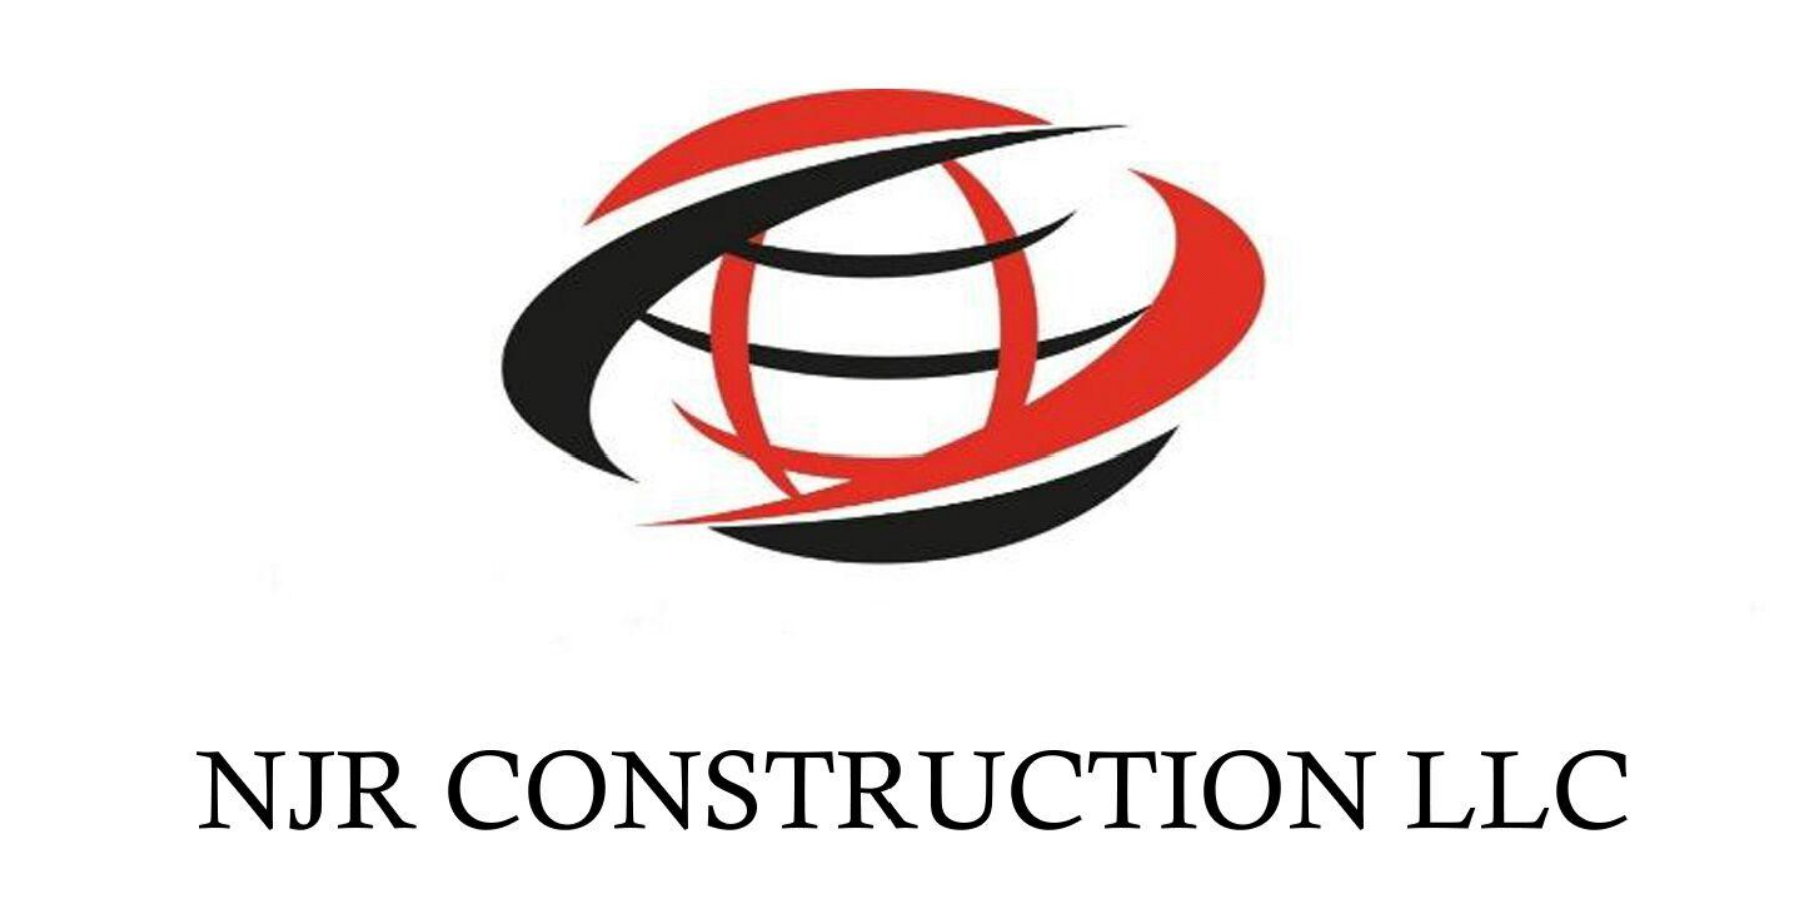 Njr Construction, Llc - Njr Construction , HD Wallpaper & Backgrounds